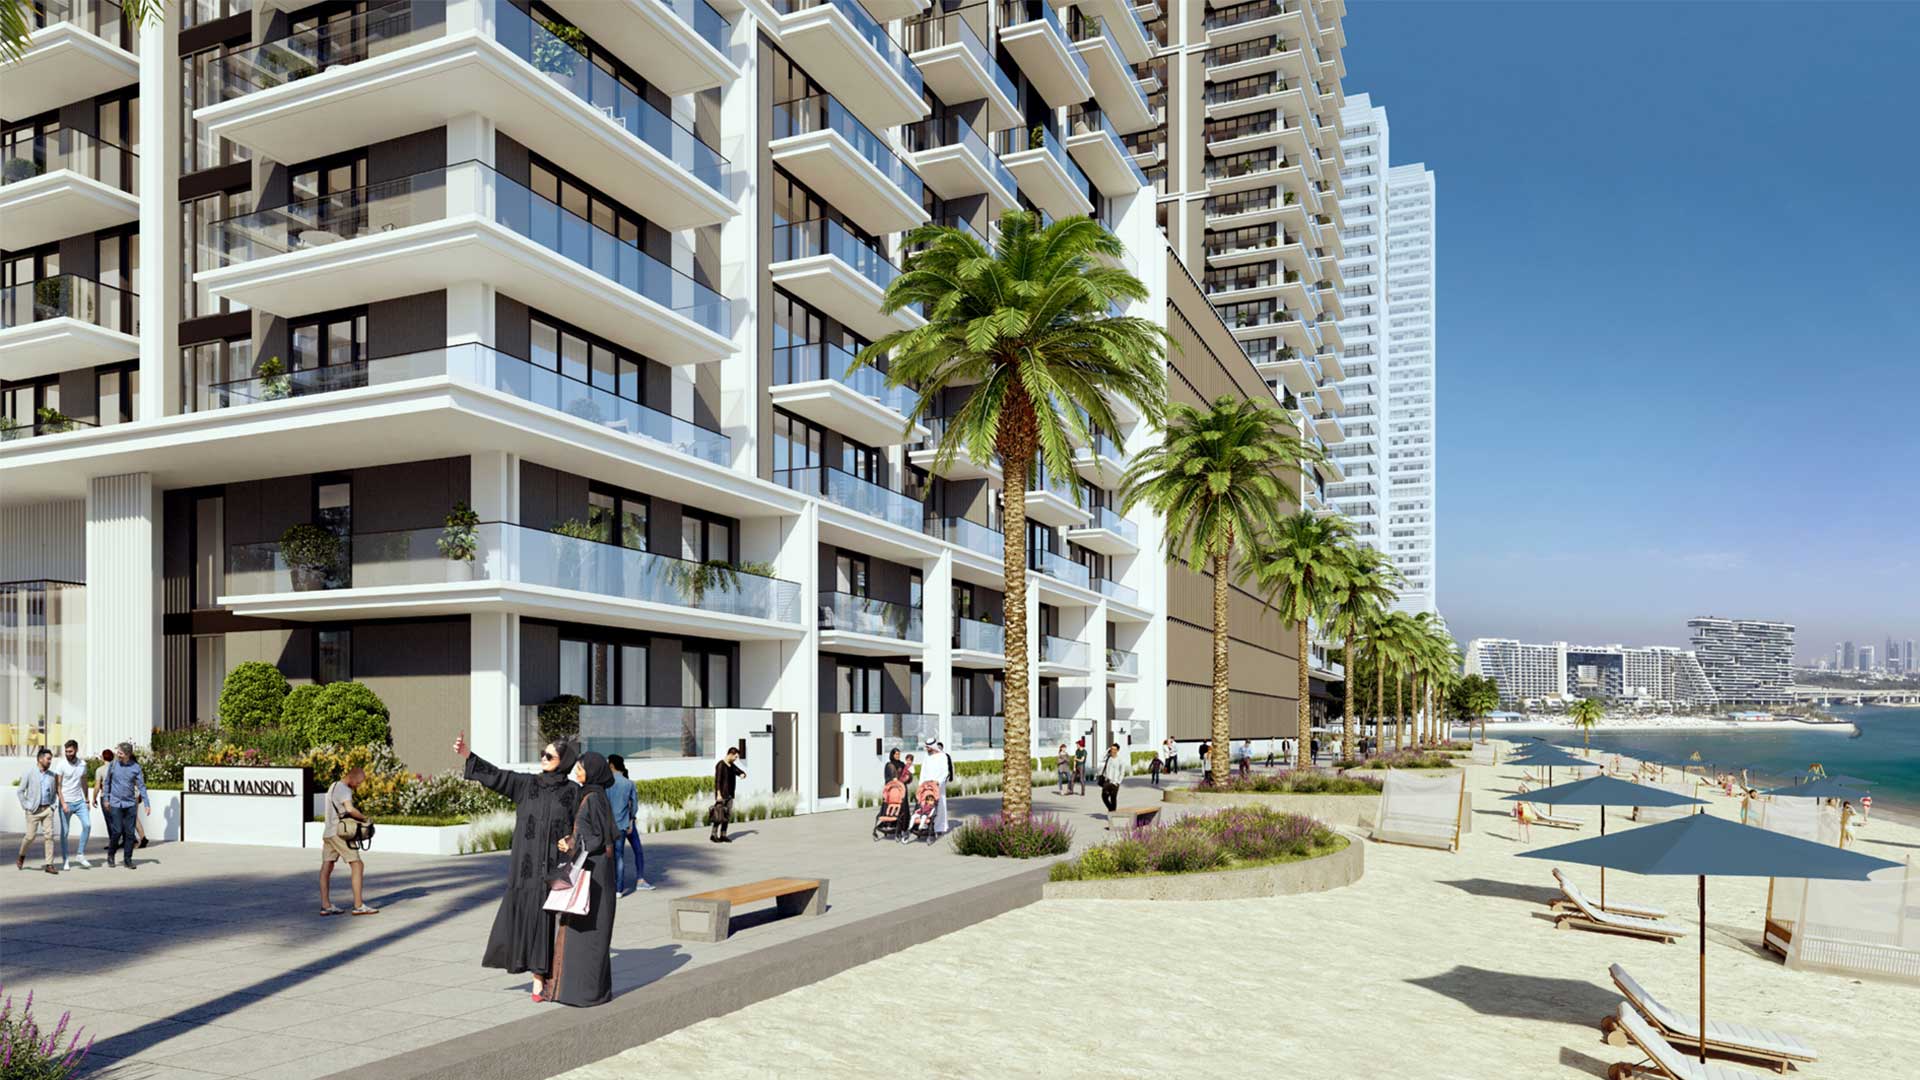 BEACH MANSION от Emaar Properties в Emaar beachfront, Dubai, ОАЭ